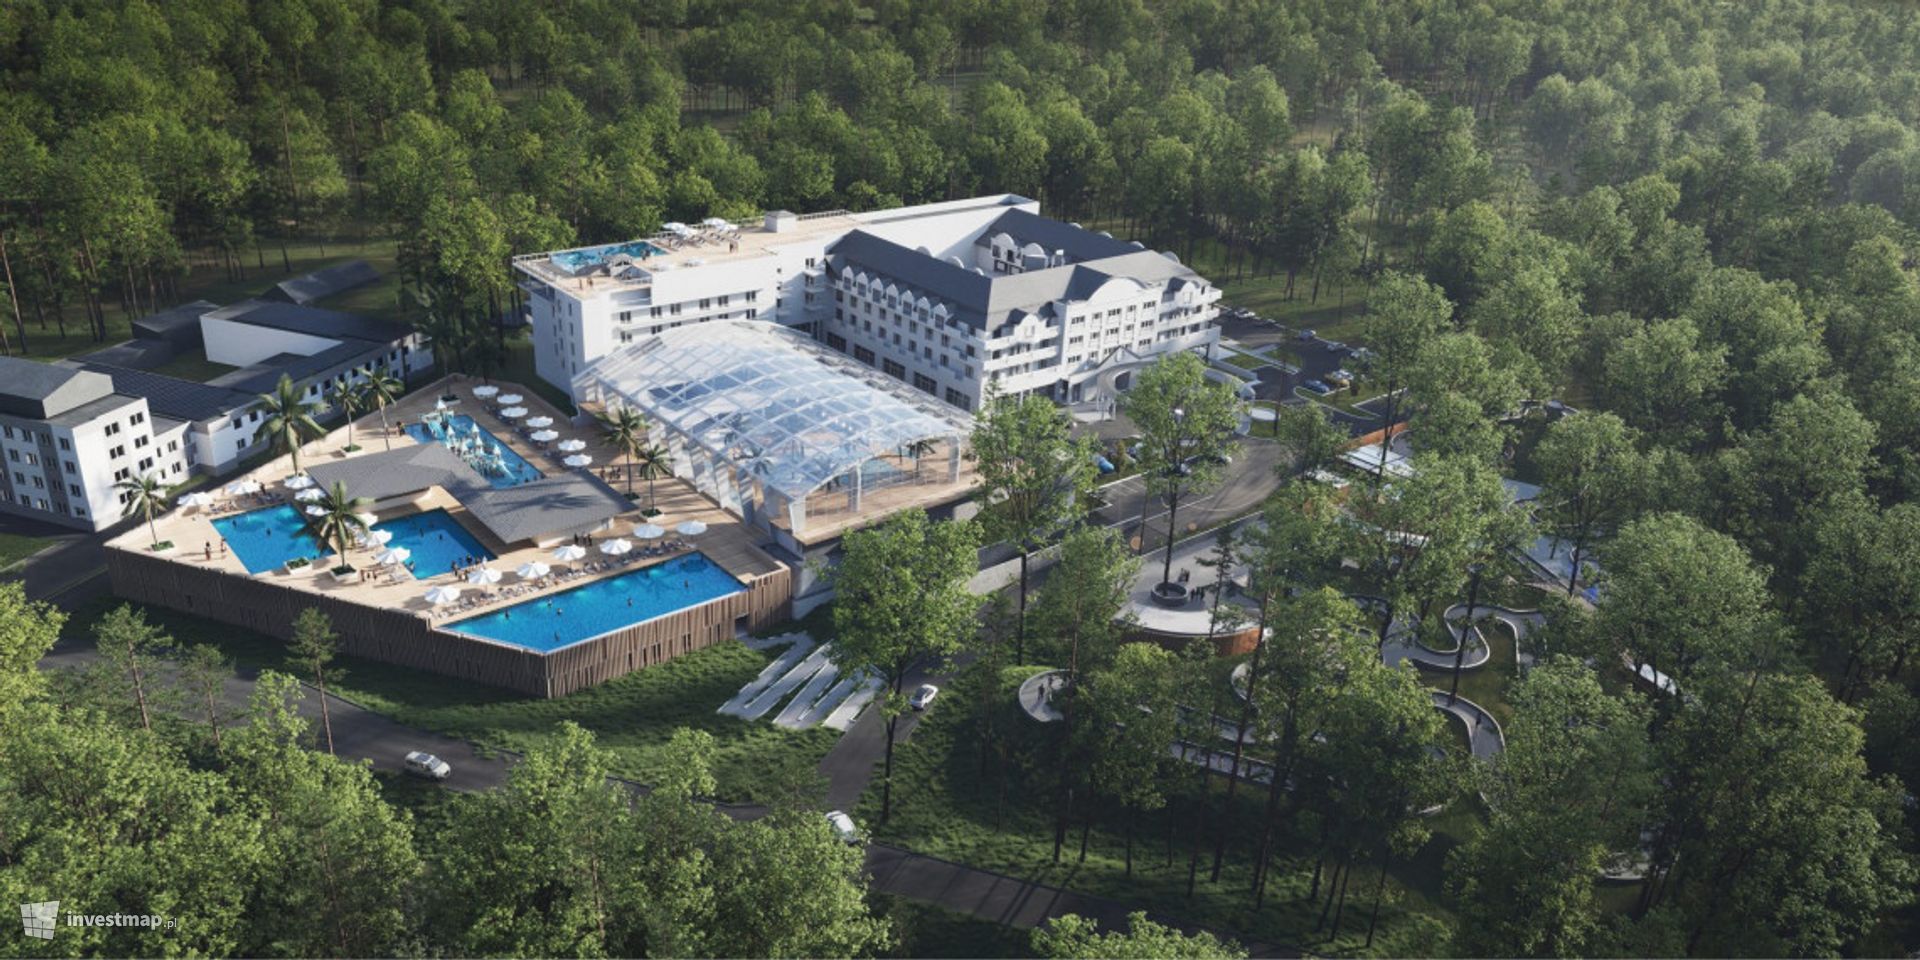 Hotel Binkowski Resort (rozbudowa)